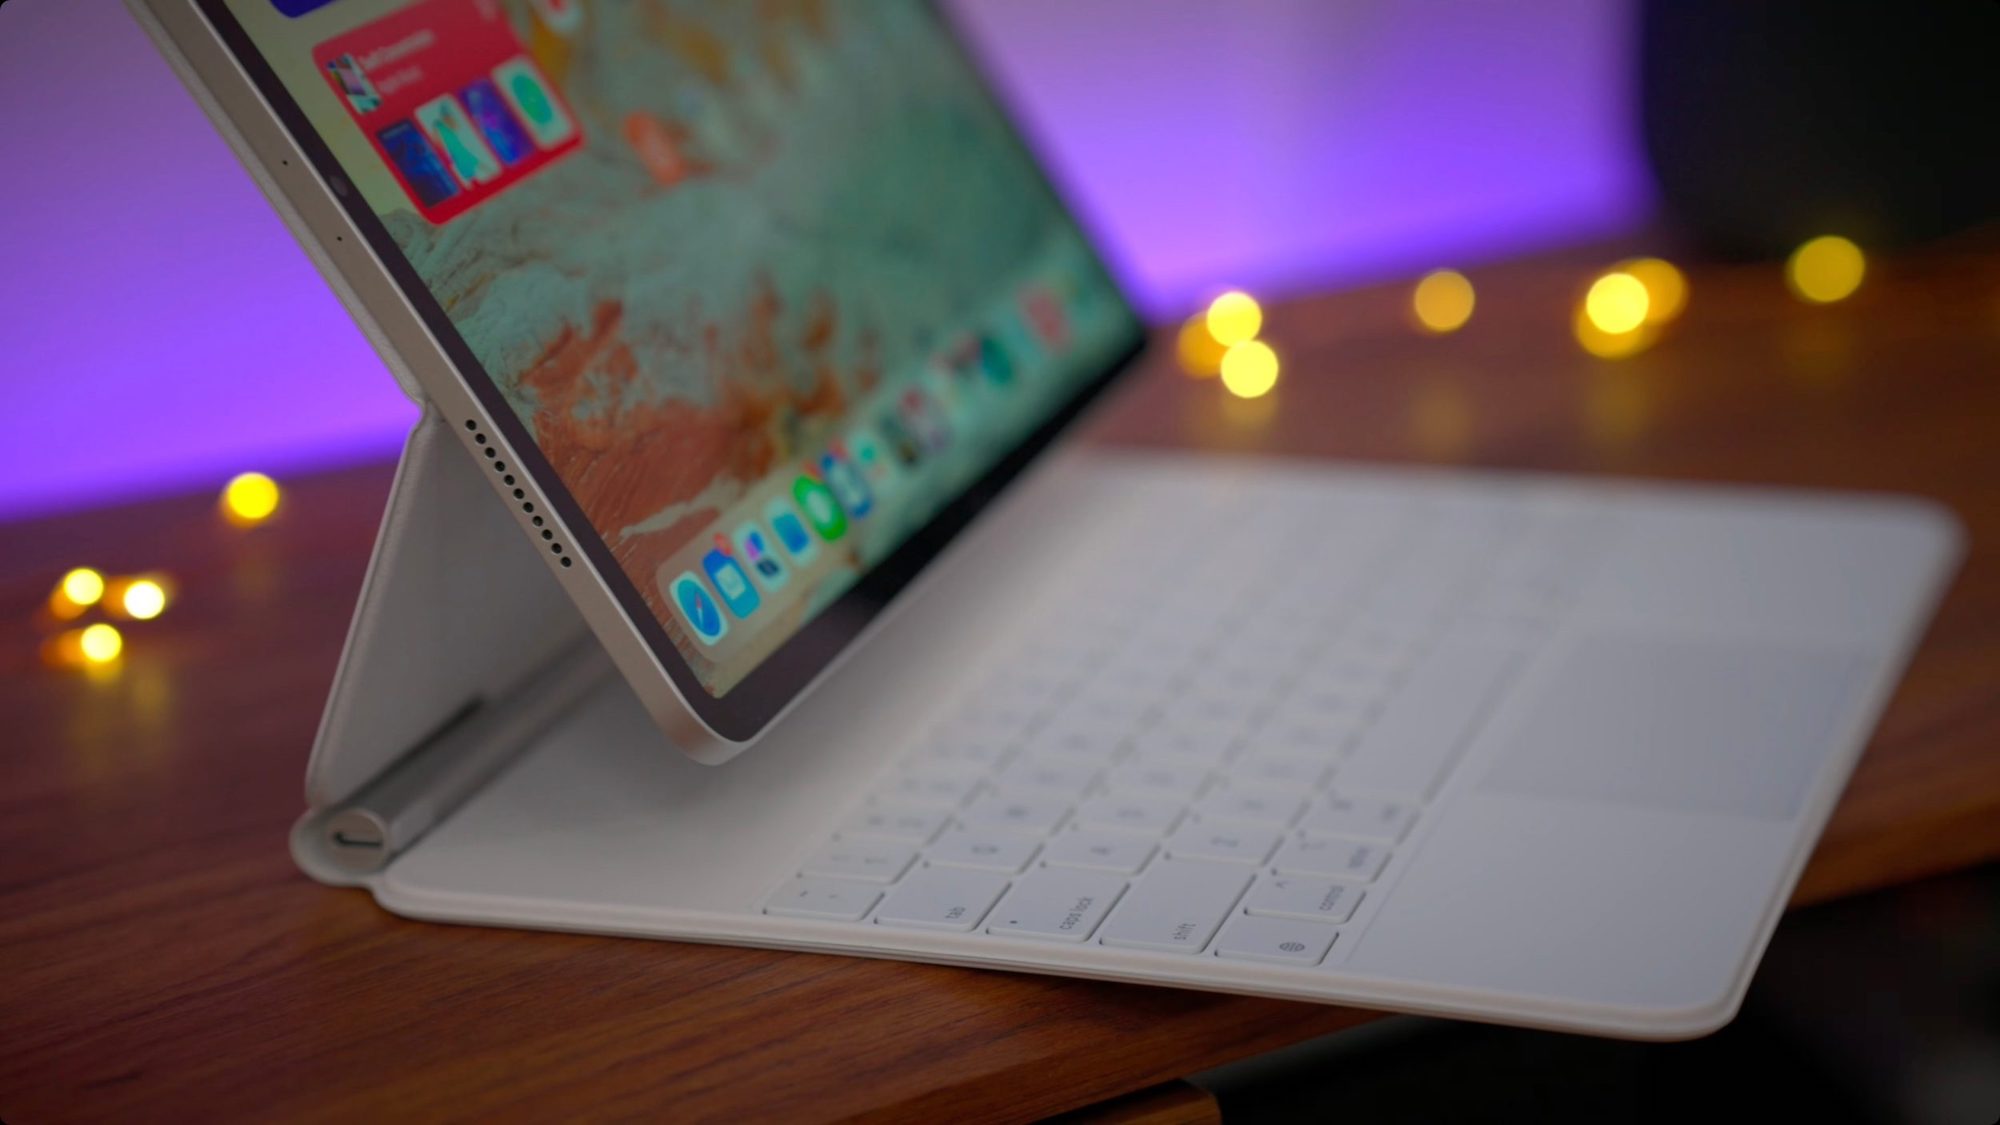 Apple to Overhaul iPad Pro with OLED Display, New Magic Keyboard in